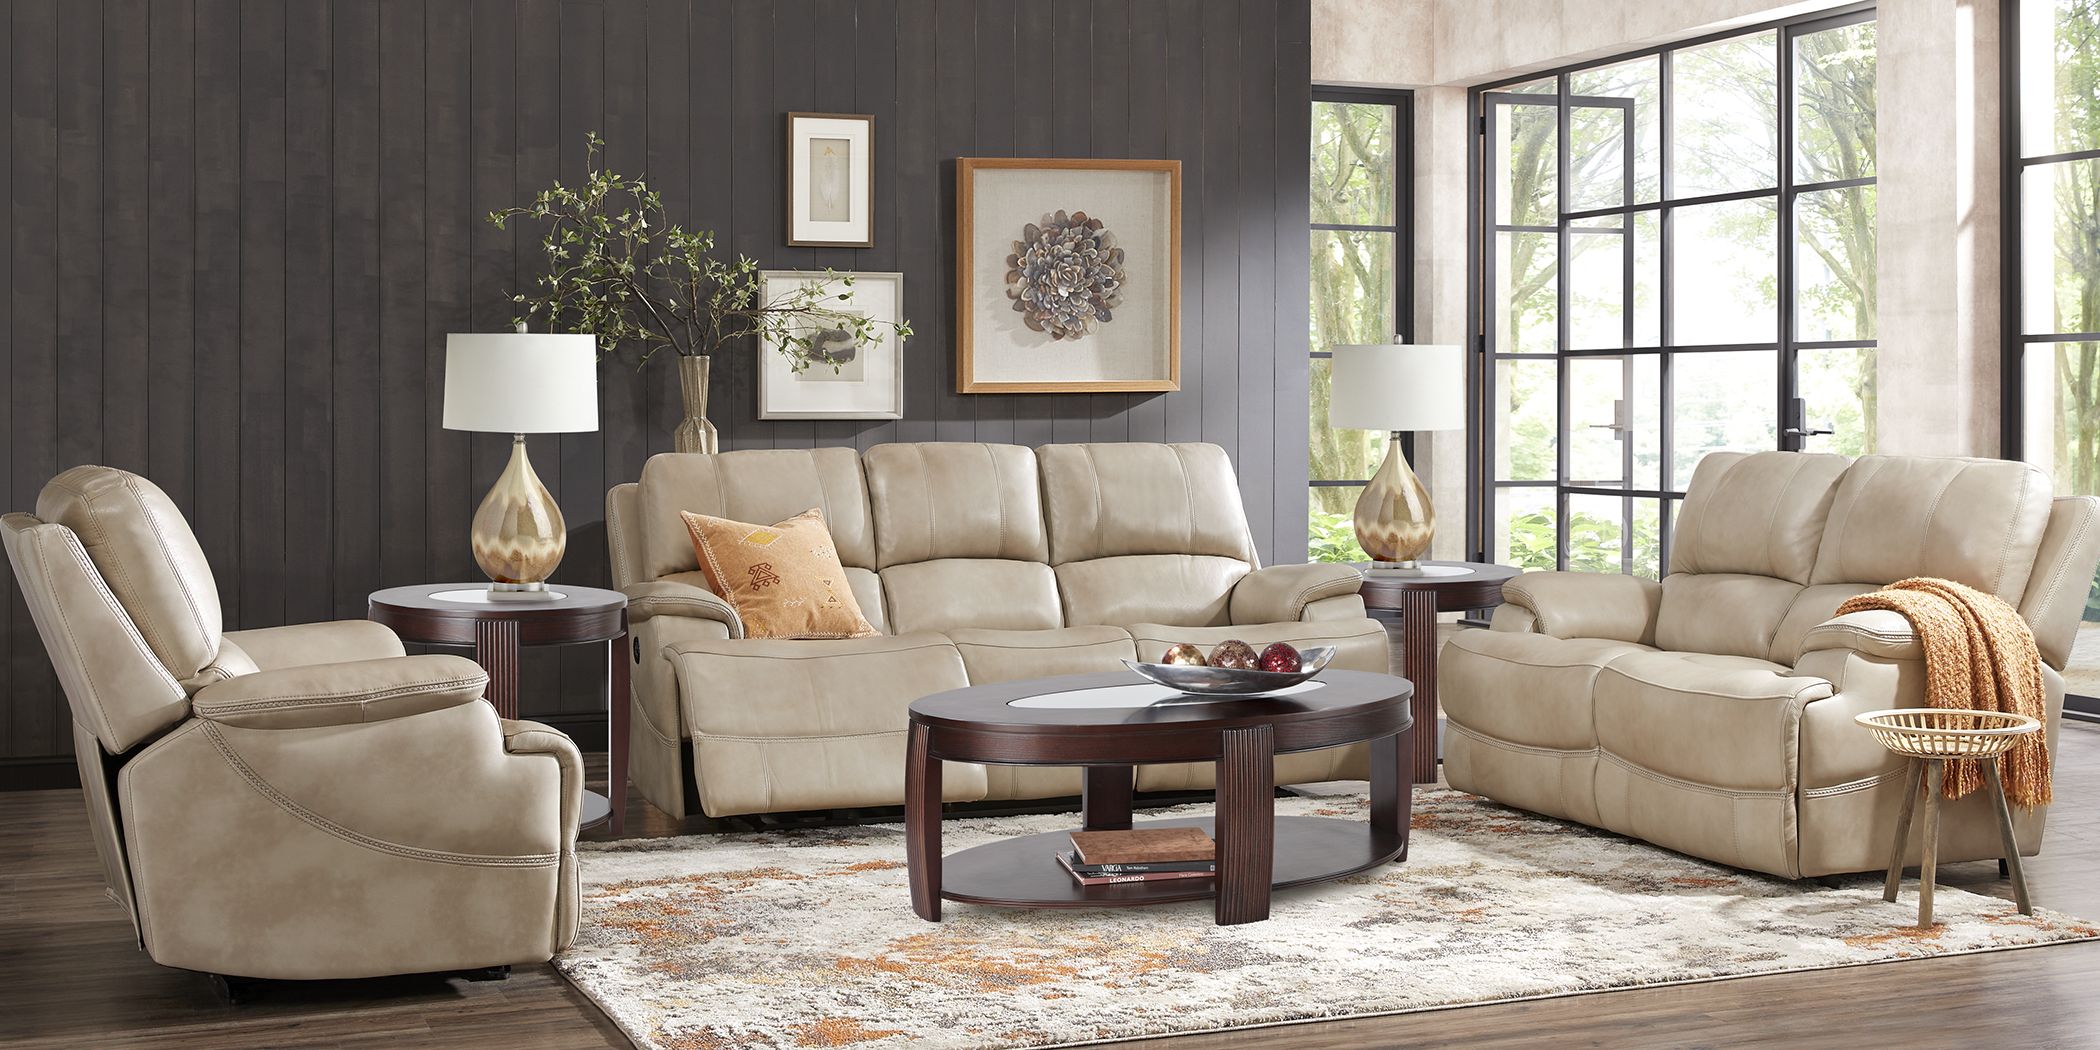 colorado living room furniture